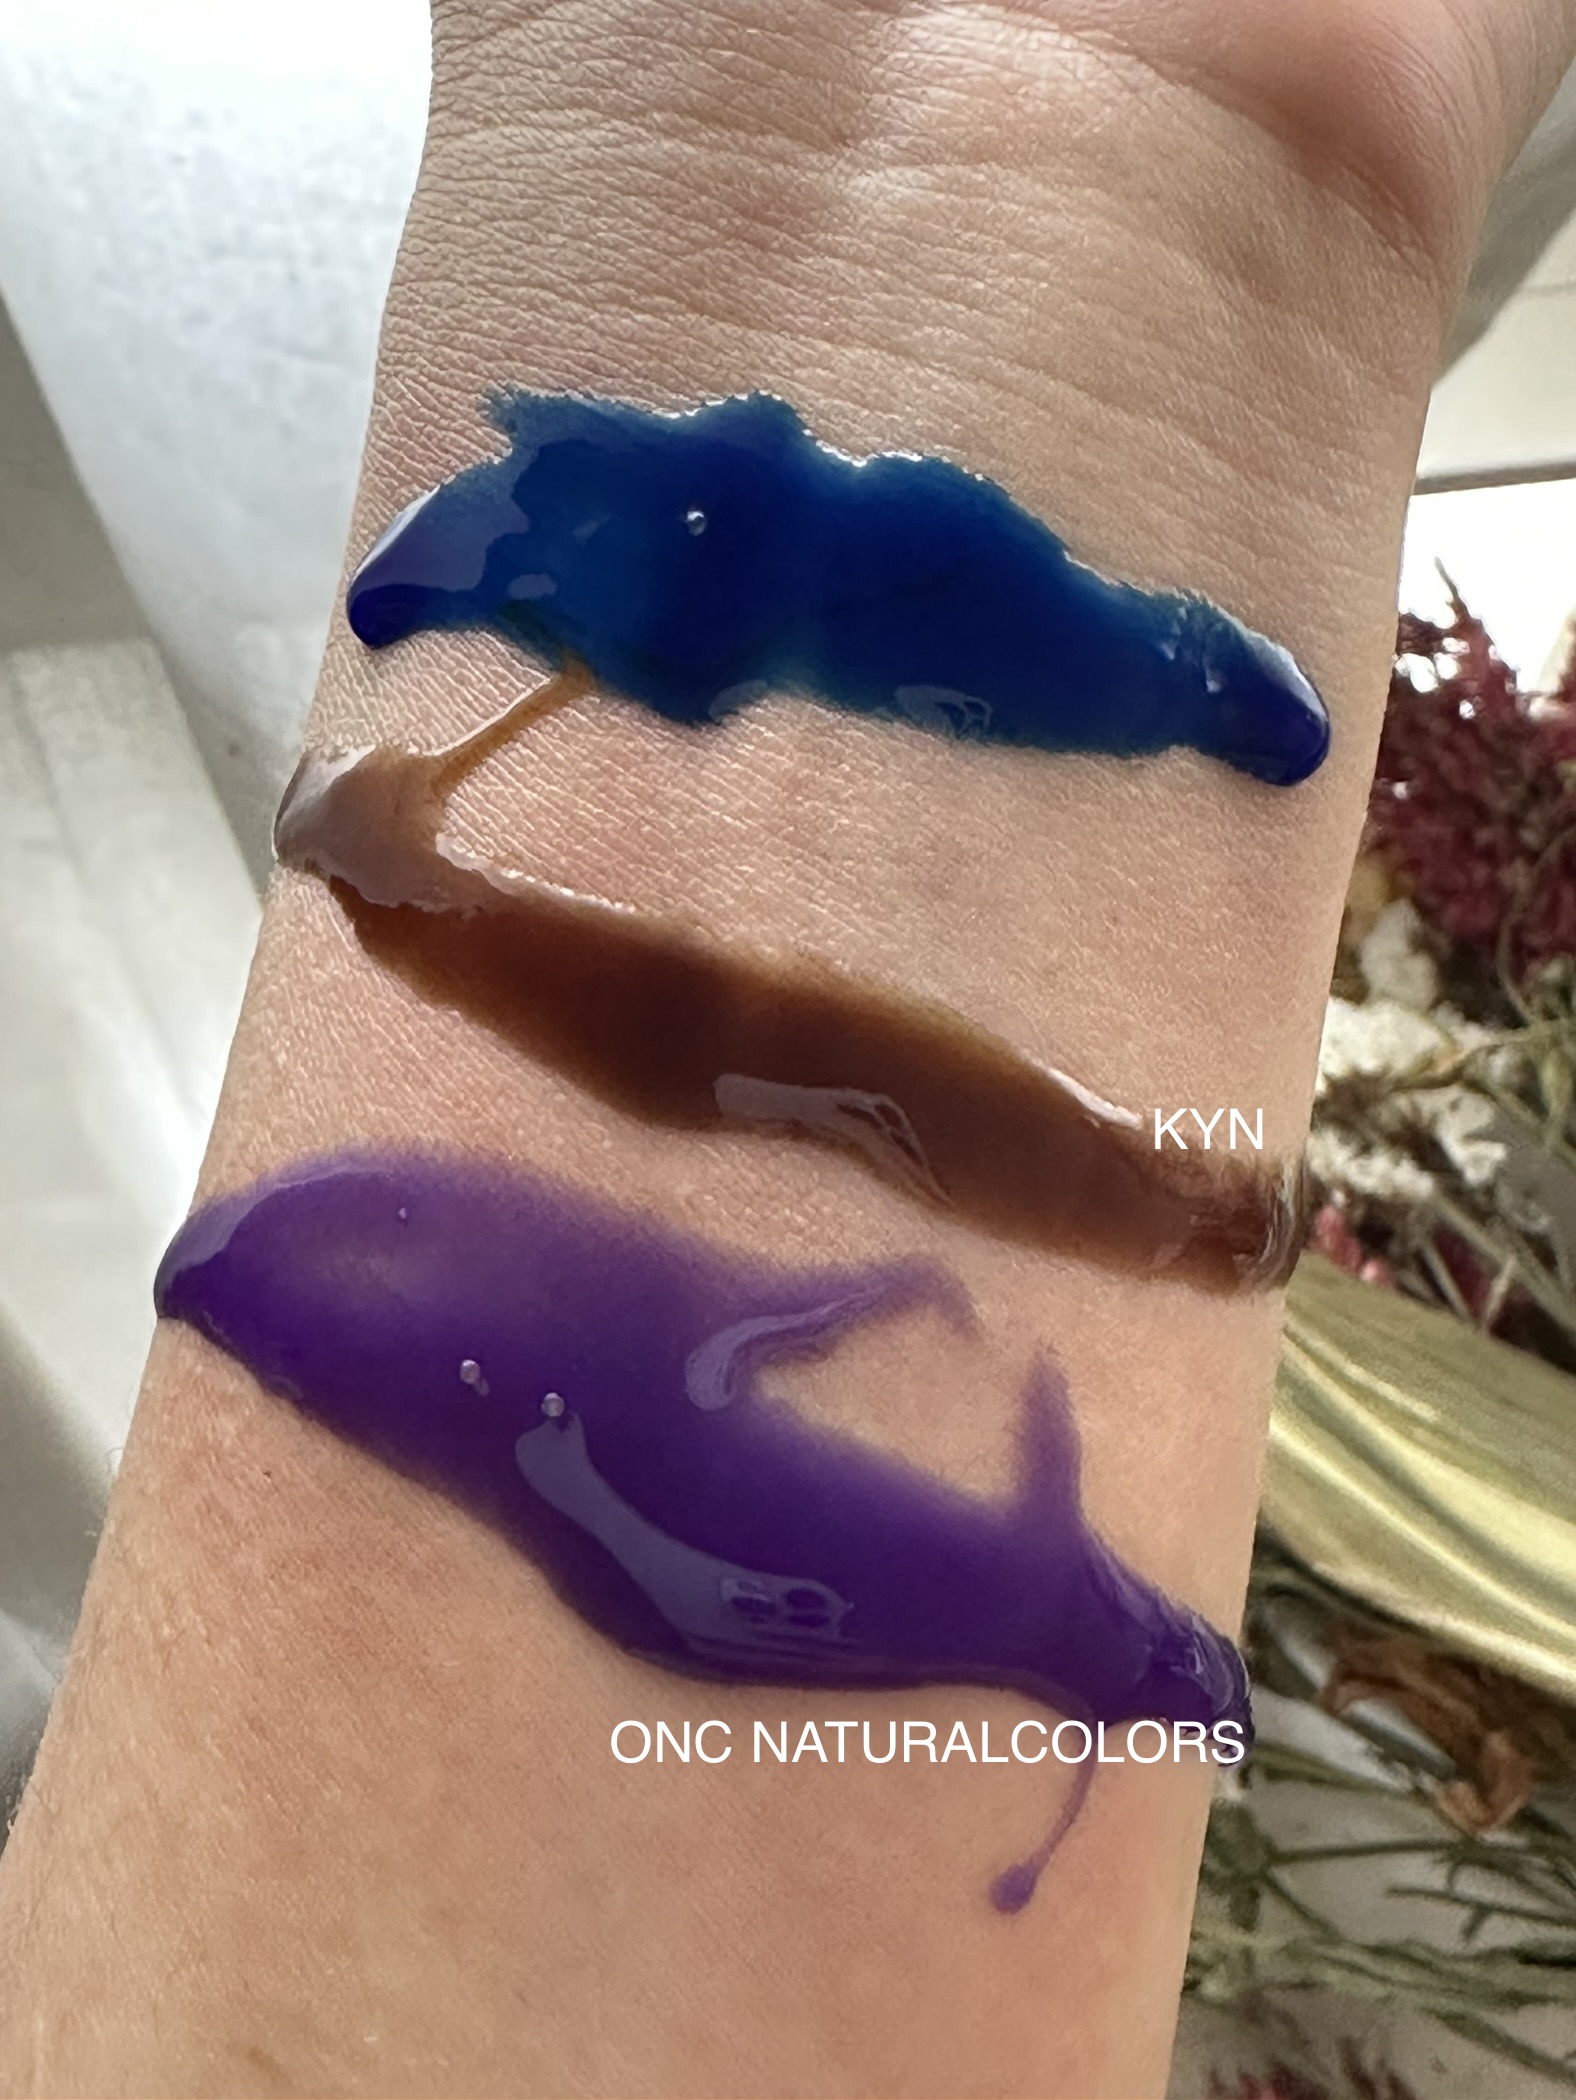 purple vs blue shampoo